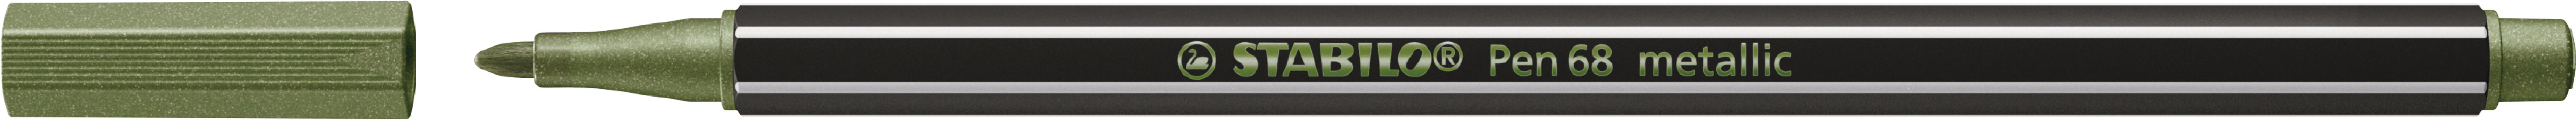 STABILO Stylo Fibre 68 68/843 metallic vert clair